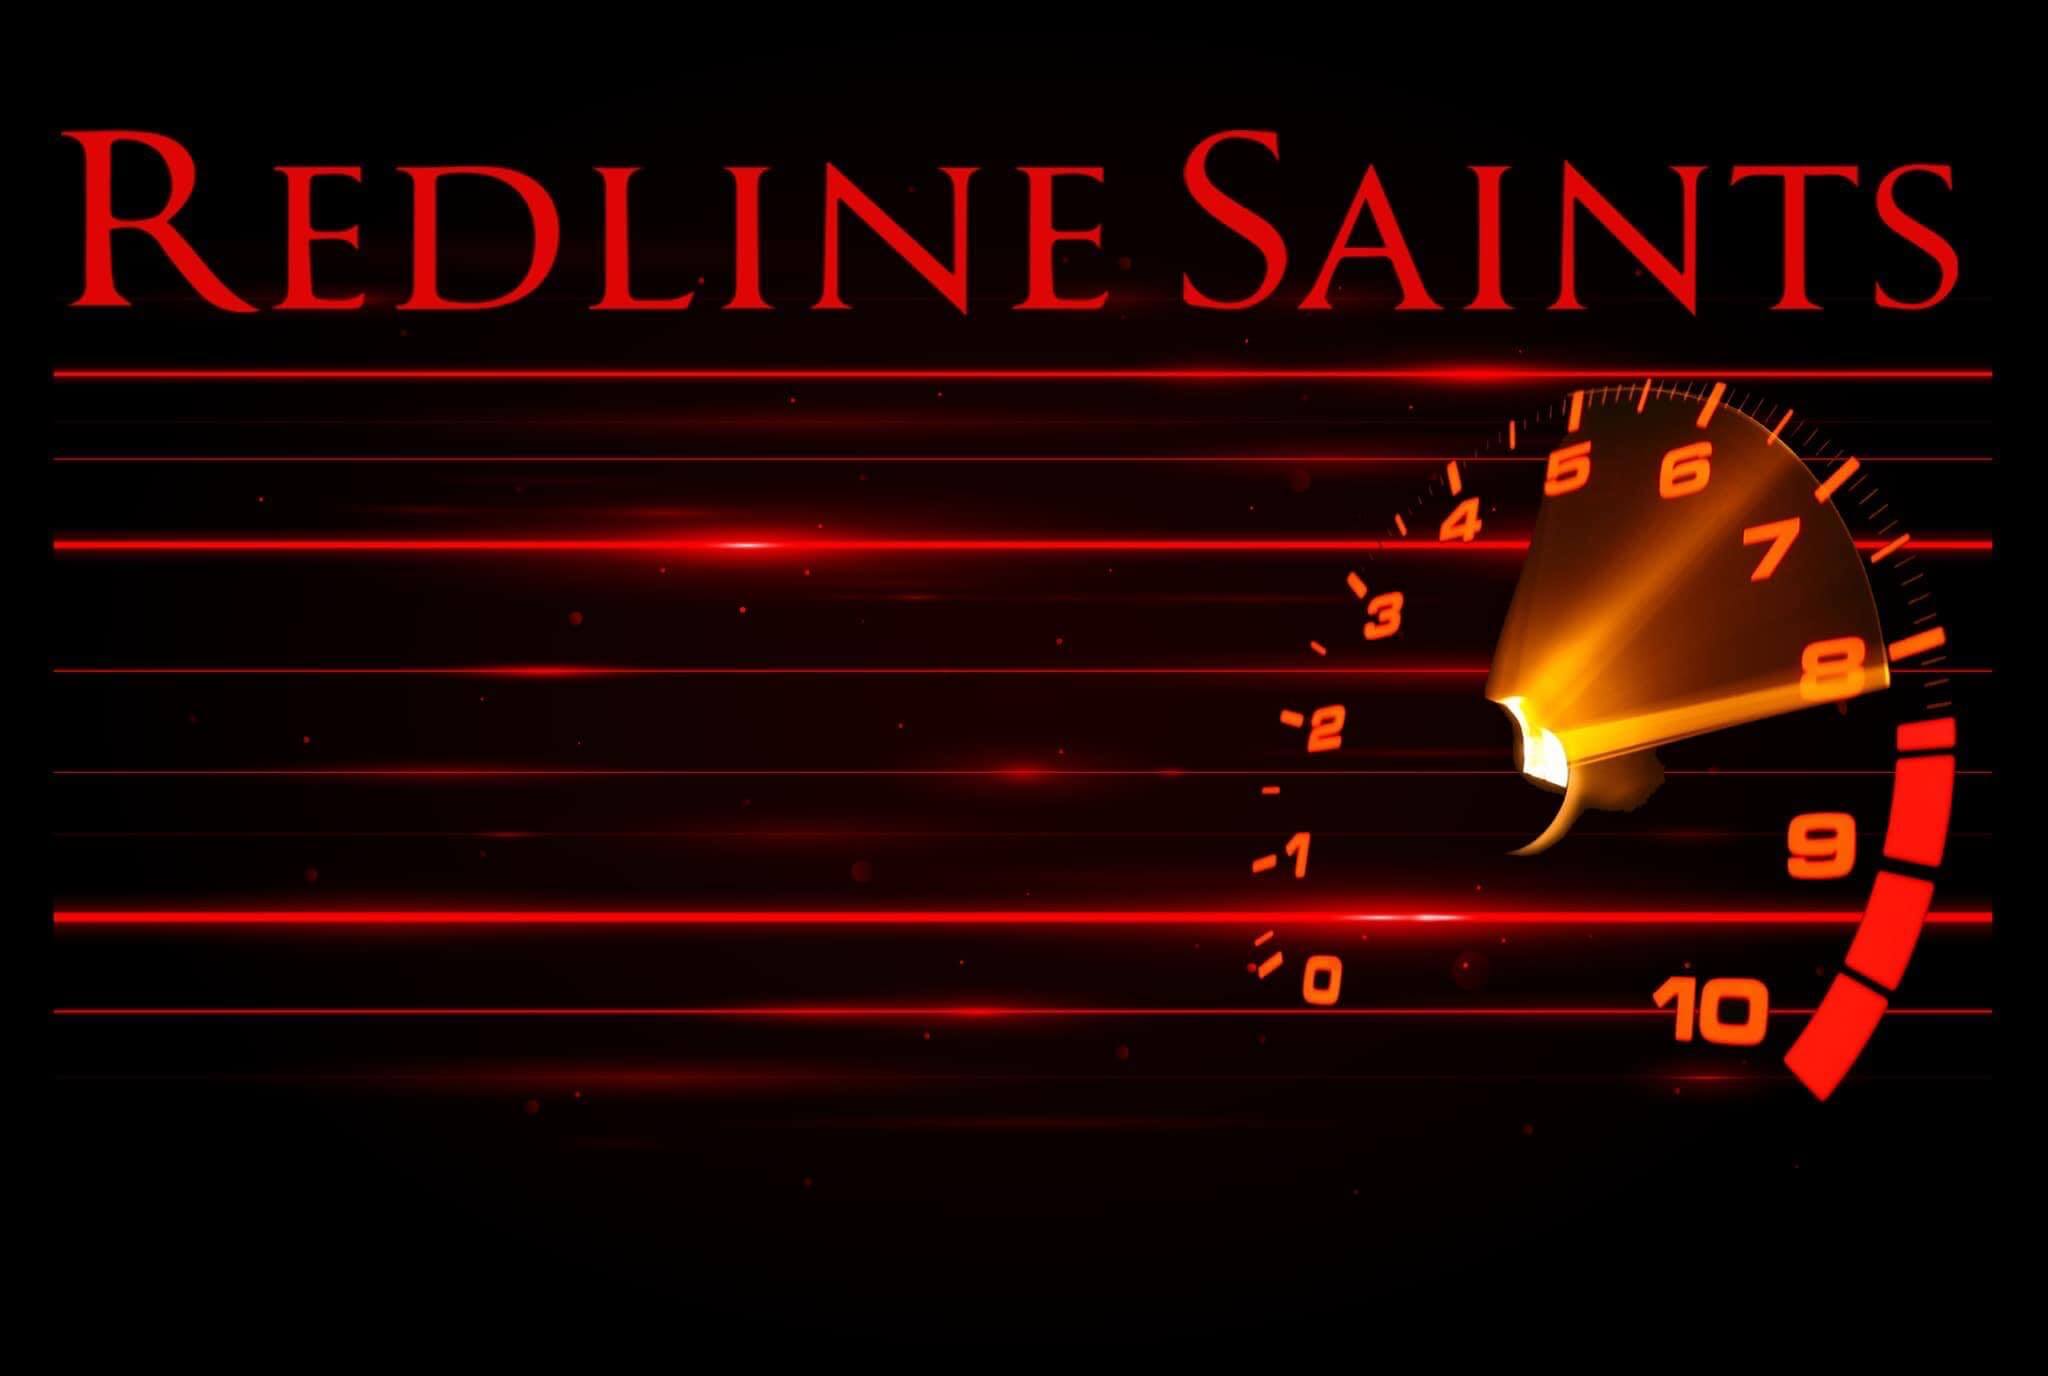 redline saints